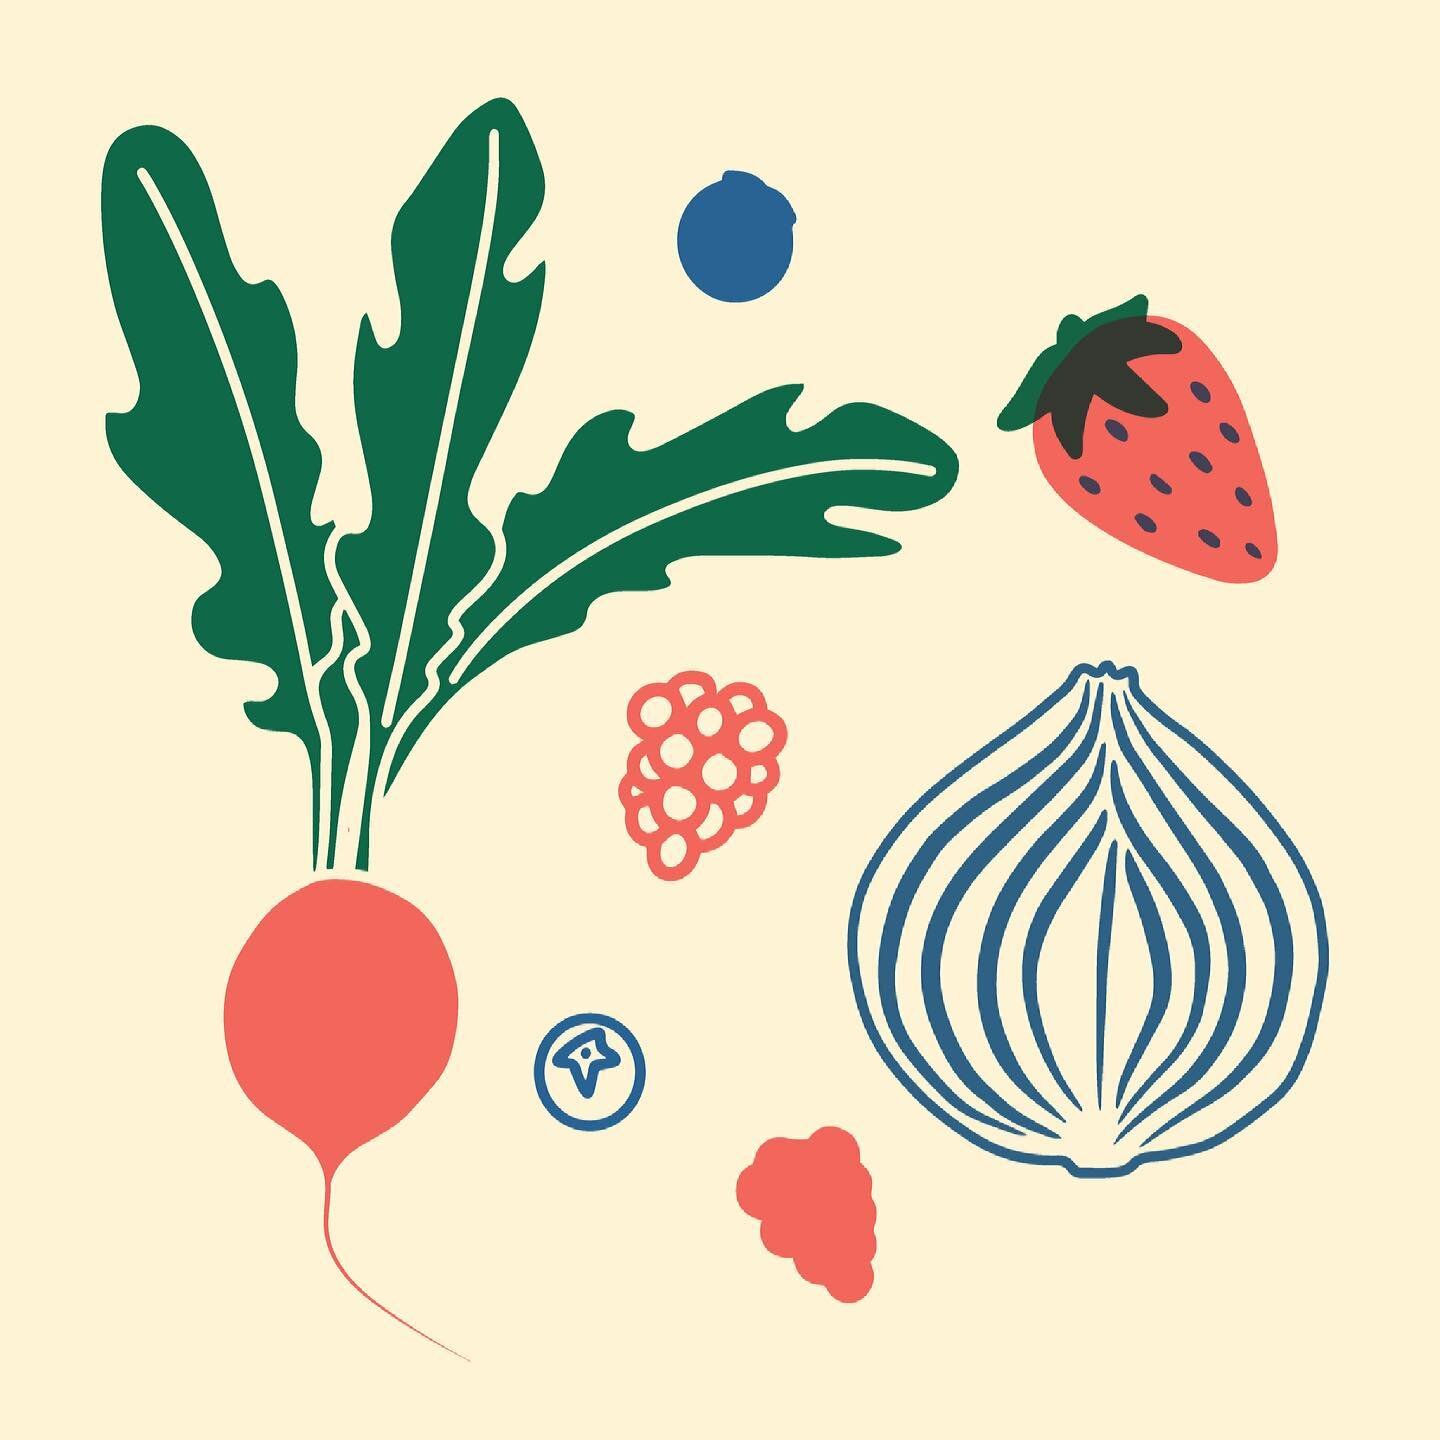 Fruits &amp; veggies 🥦🌱🍓 
.
.
.
.
.
.
.
.
.
.
.
#illustration #freelanceartist #createcultivate #creativeladydirectory #mycreativebiz #onegirlband #retrographic #retroicons #veggies #fruit #discoverunder5k #dreamersanddoers #graphicdesign #posterd